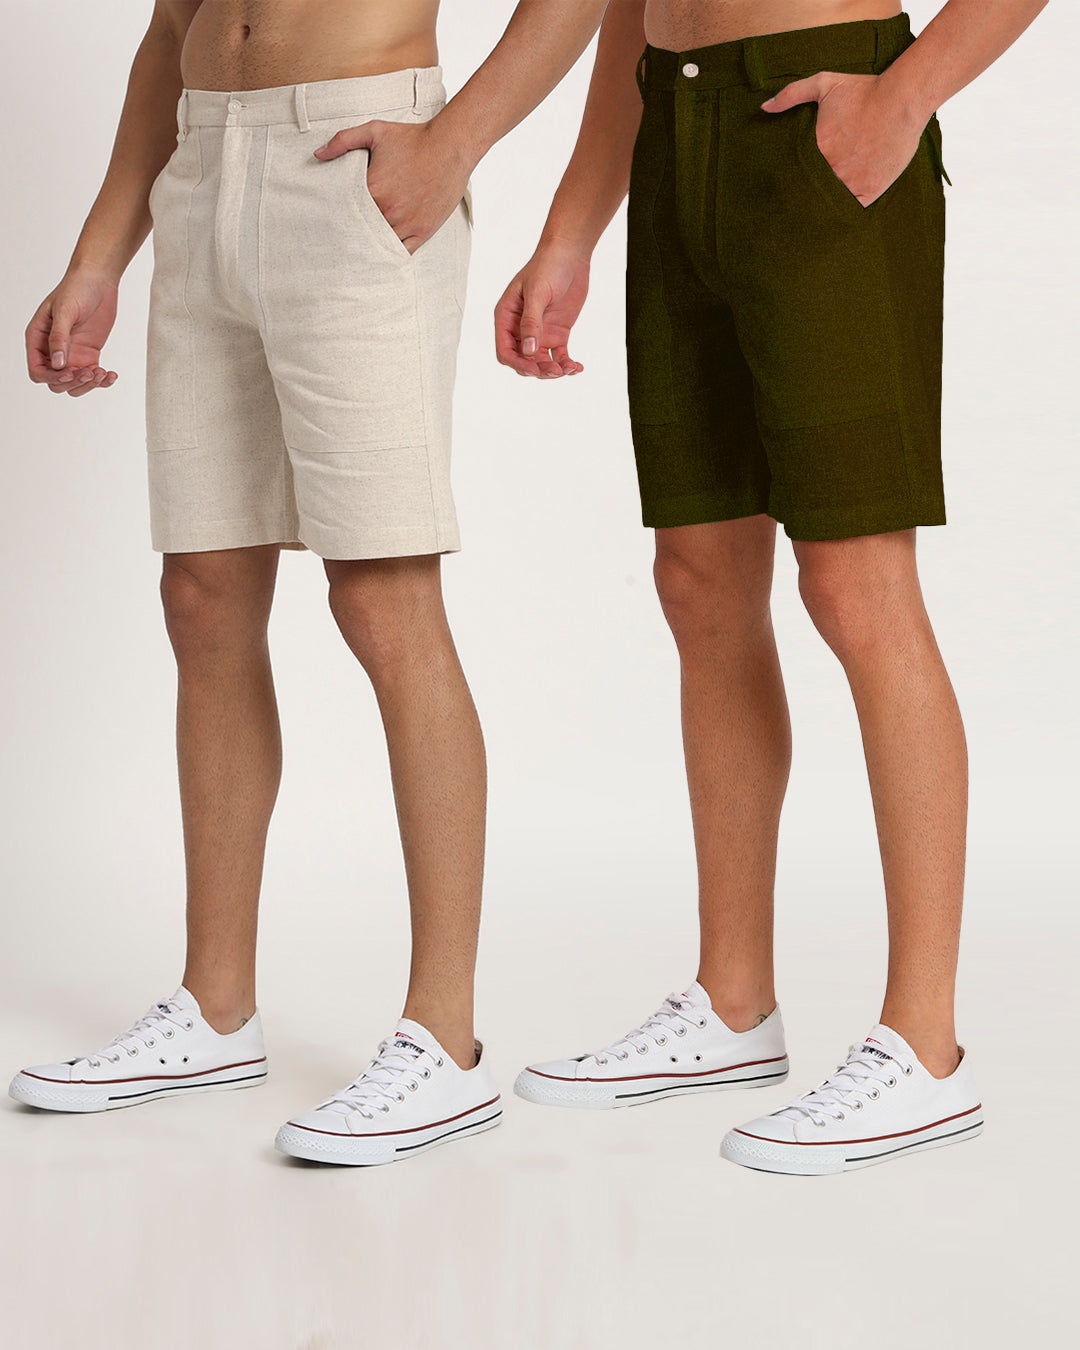 Combo : Patch Pocket Playtime Beige & Olive Green Men's Shorts